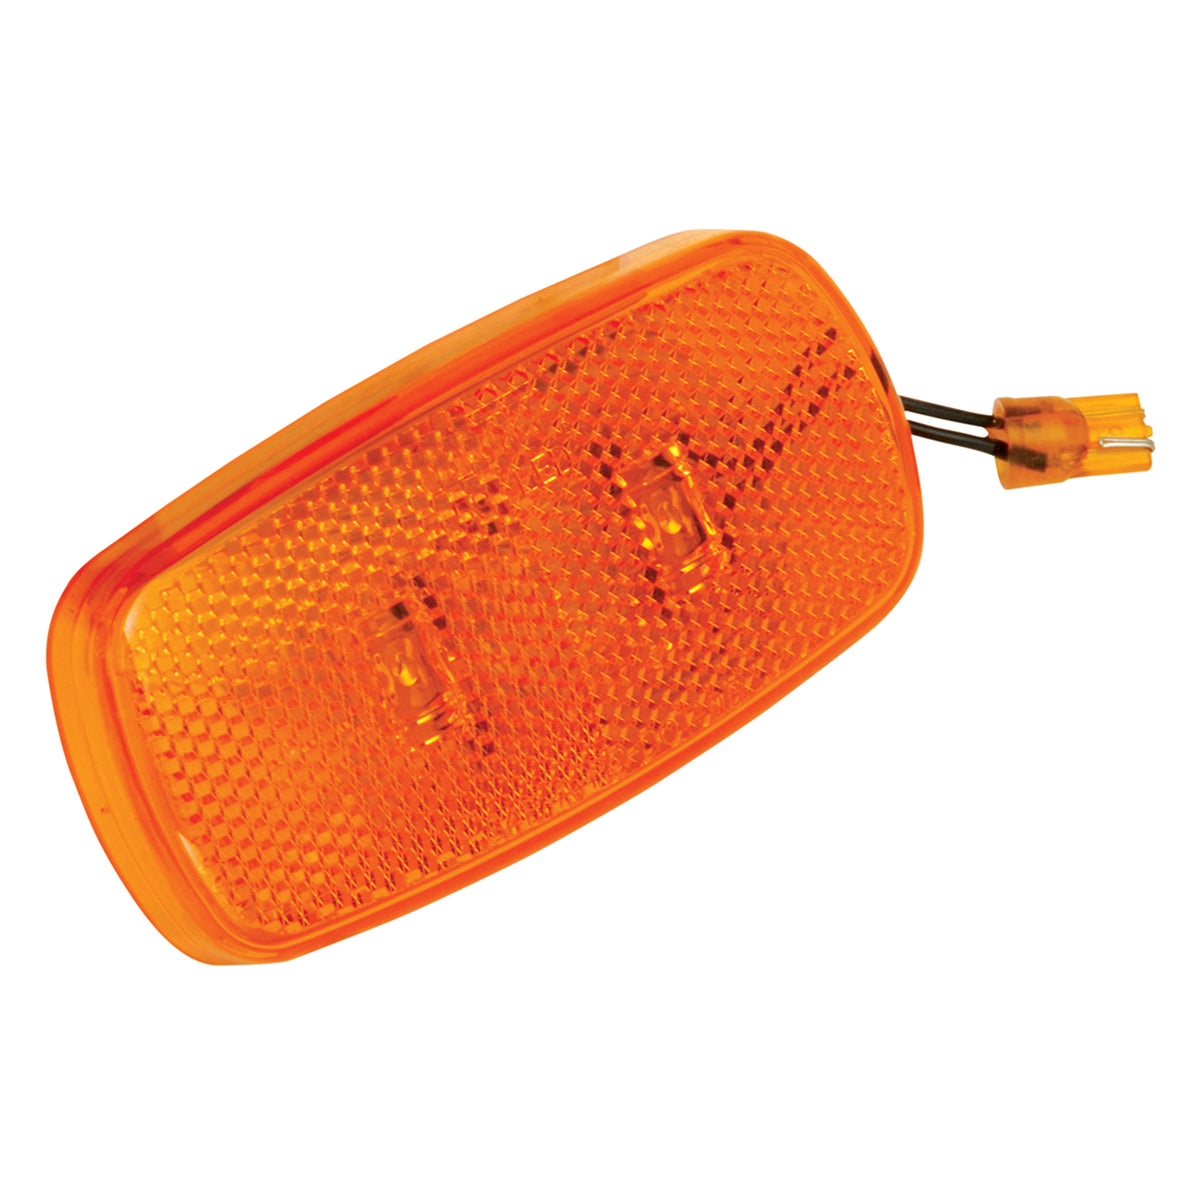 Bargman 42-59-412 Clearance Light #59 LED Upgrade Kit - Amber